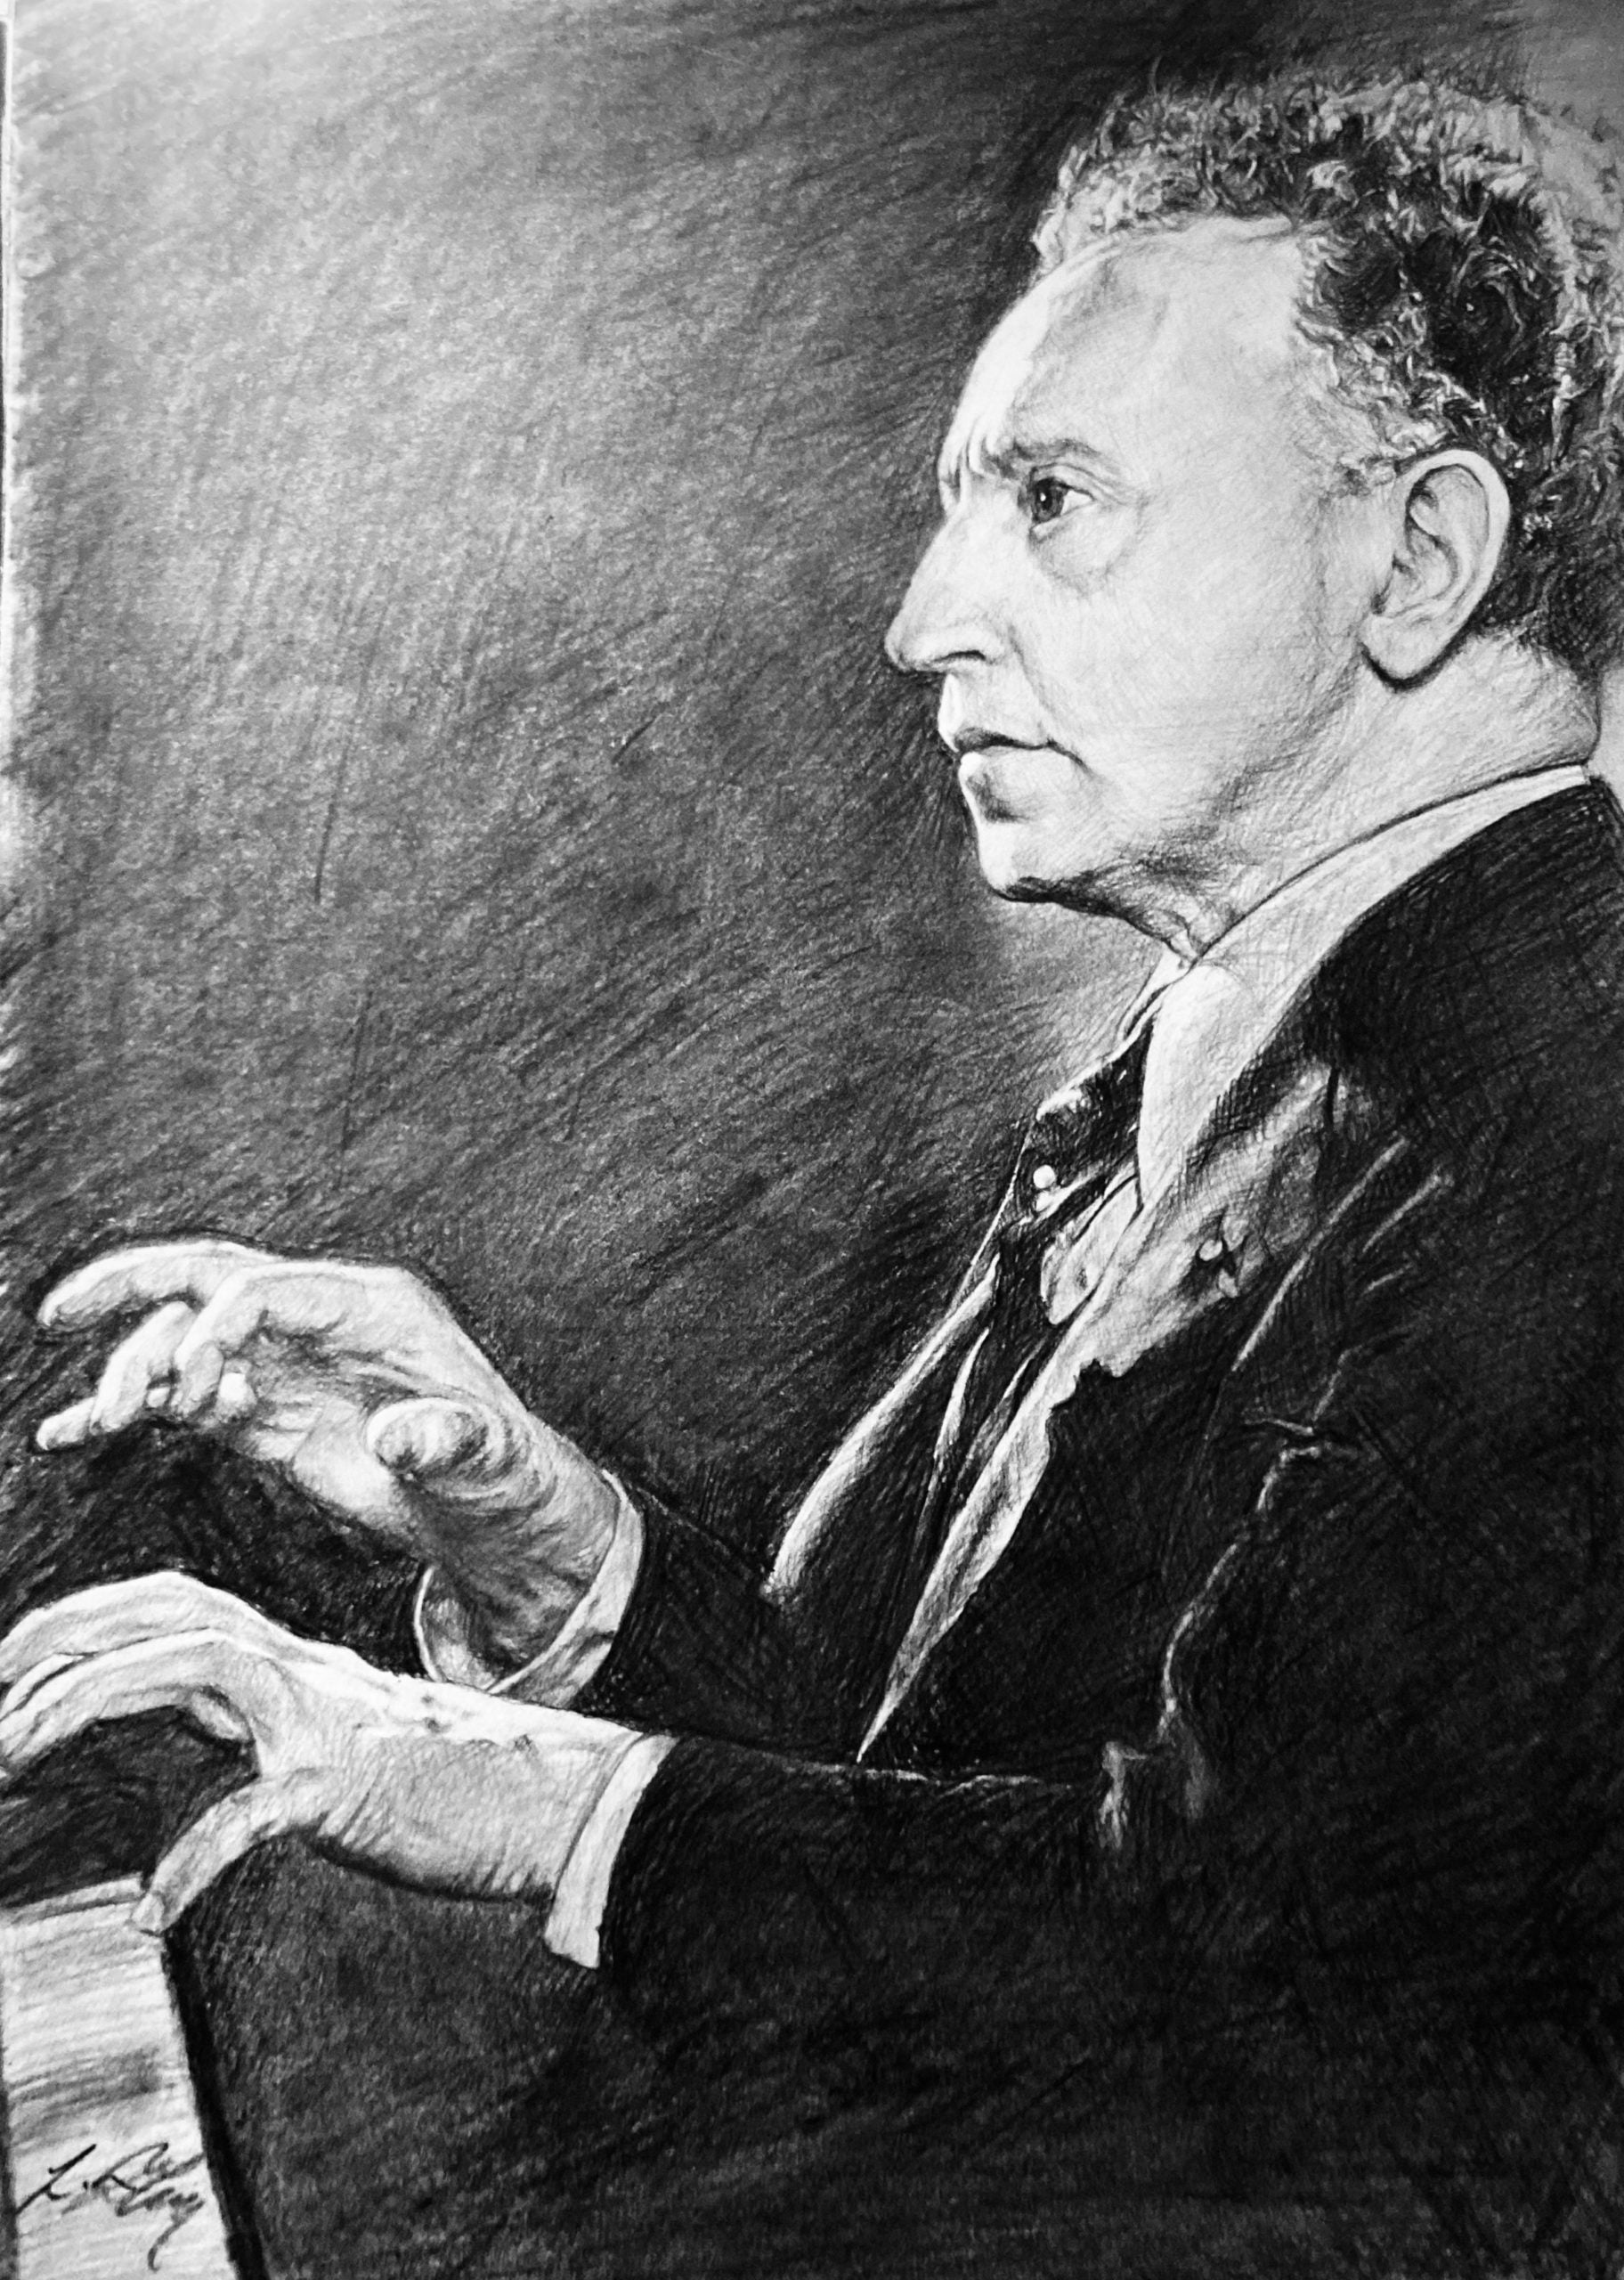 Well Played – Arthur Rubinstein